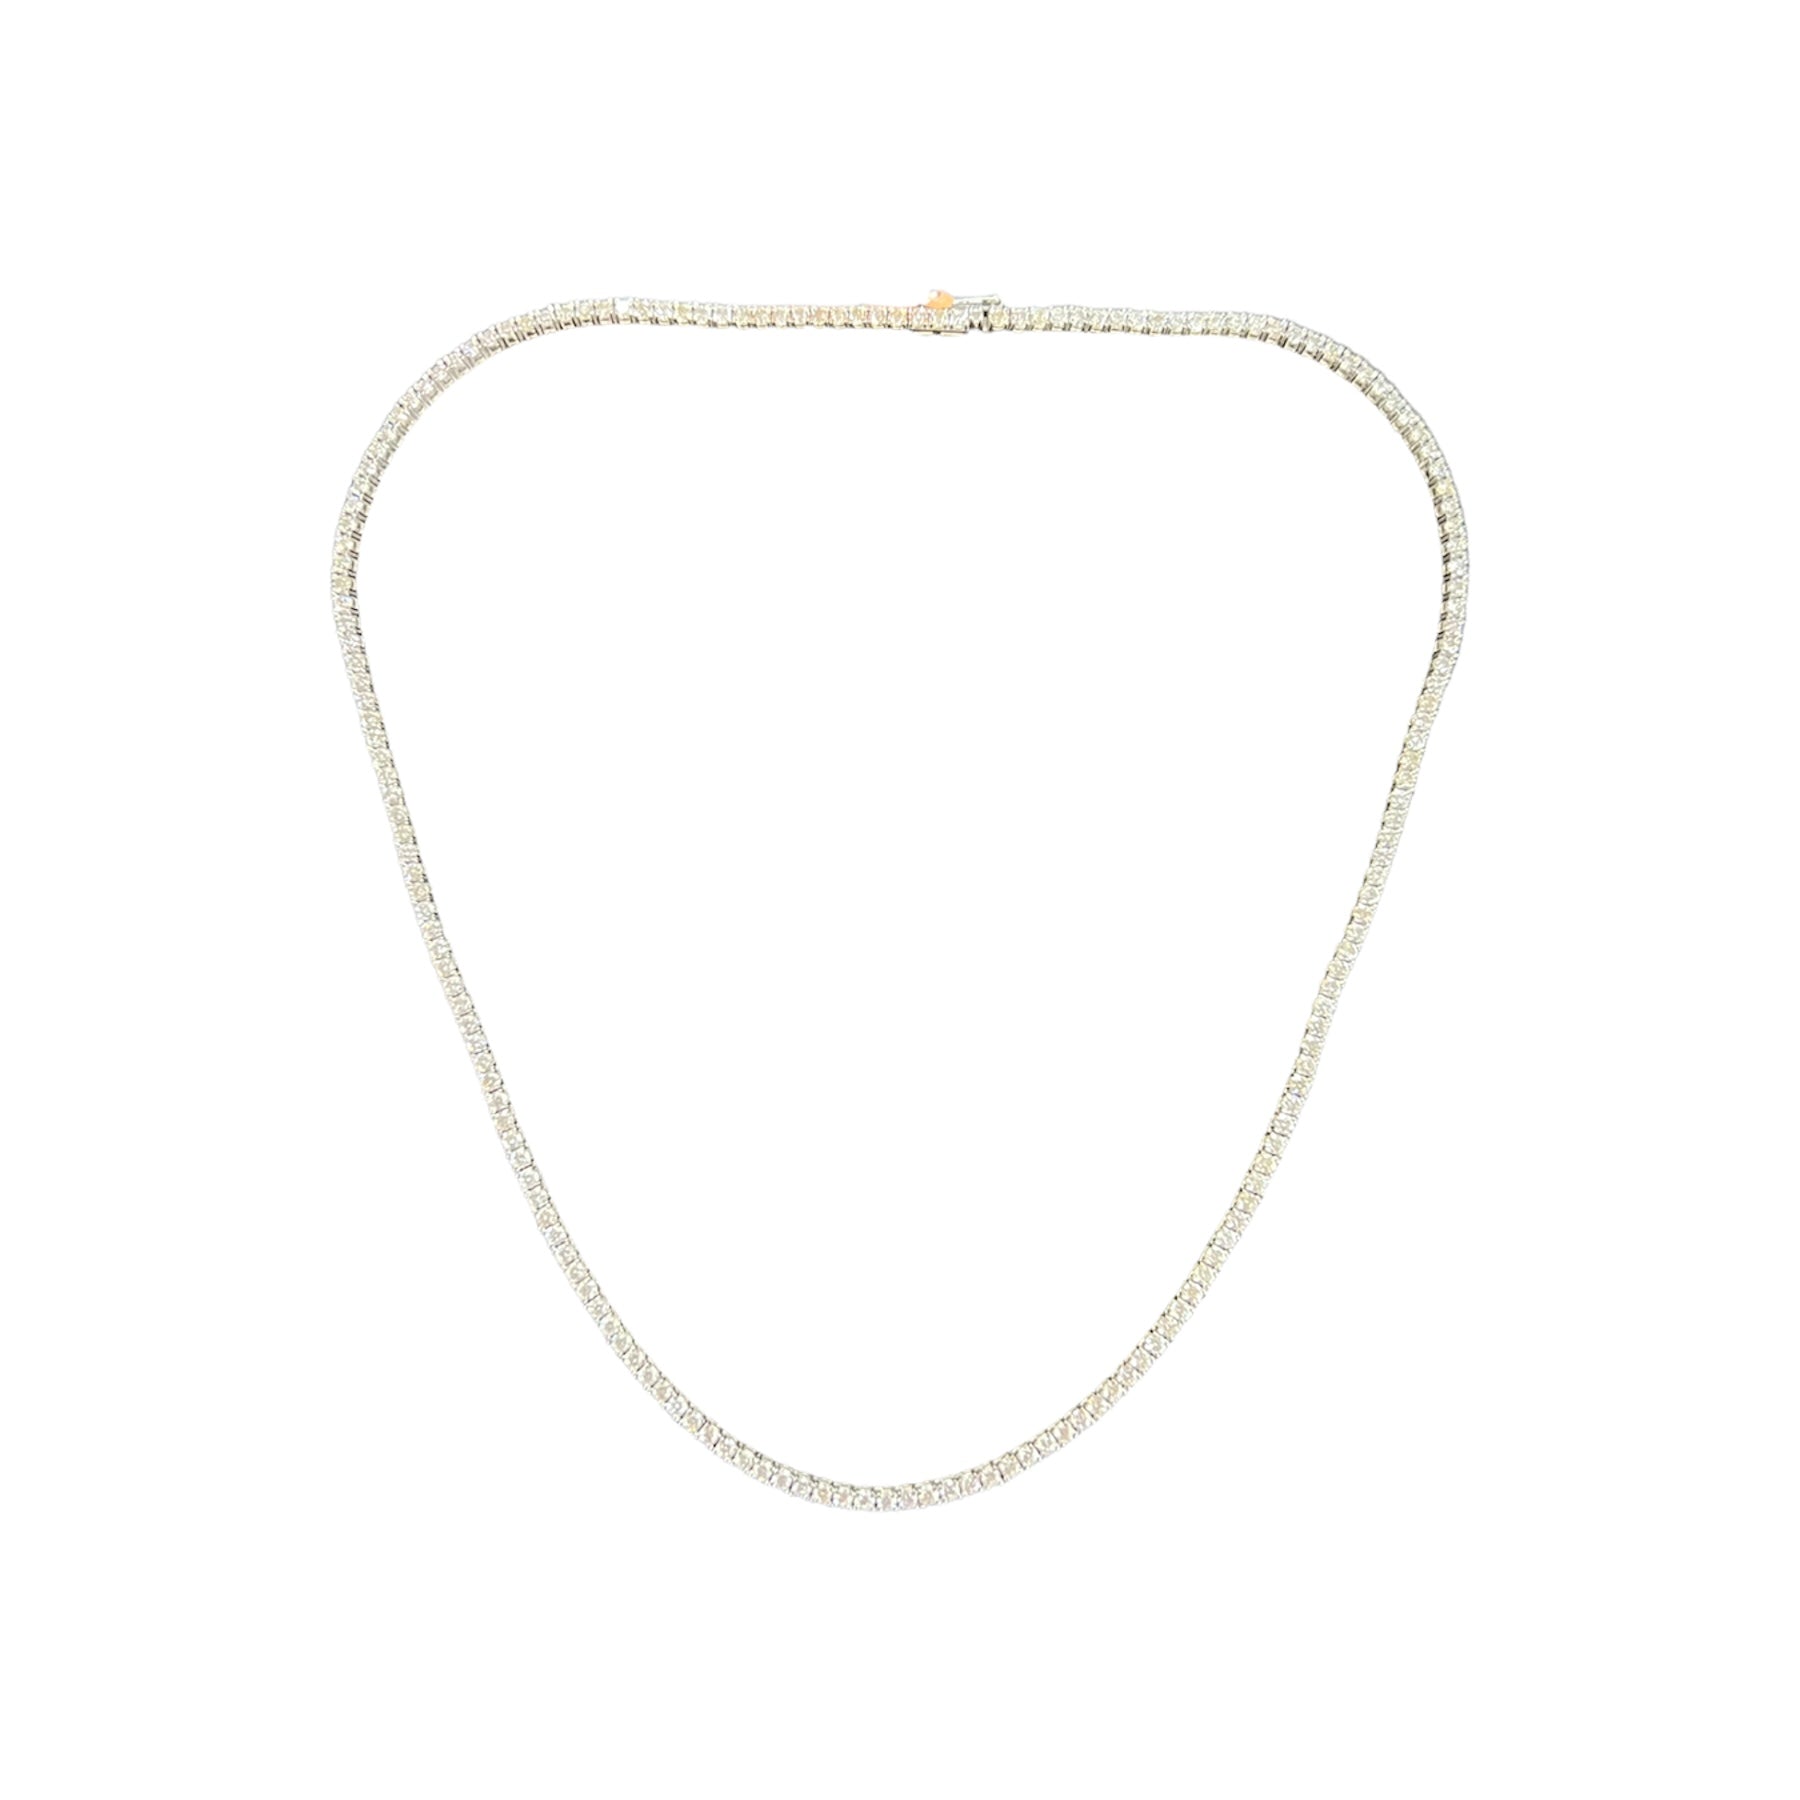 6.34CT Diamond Tennis Necklace 14K White Gold 16.5”